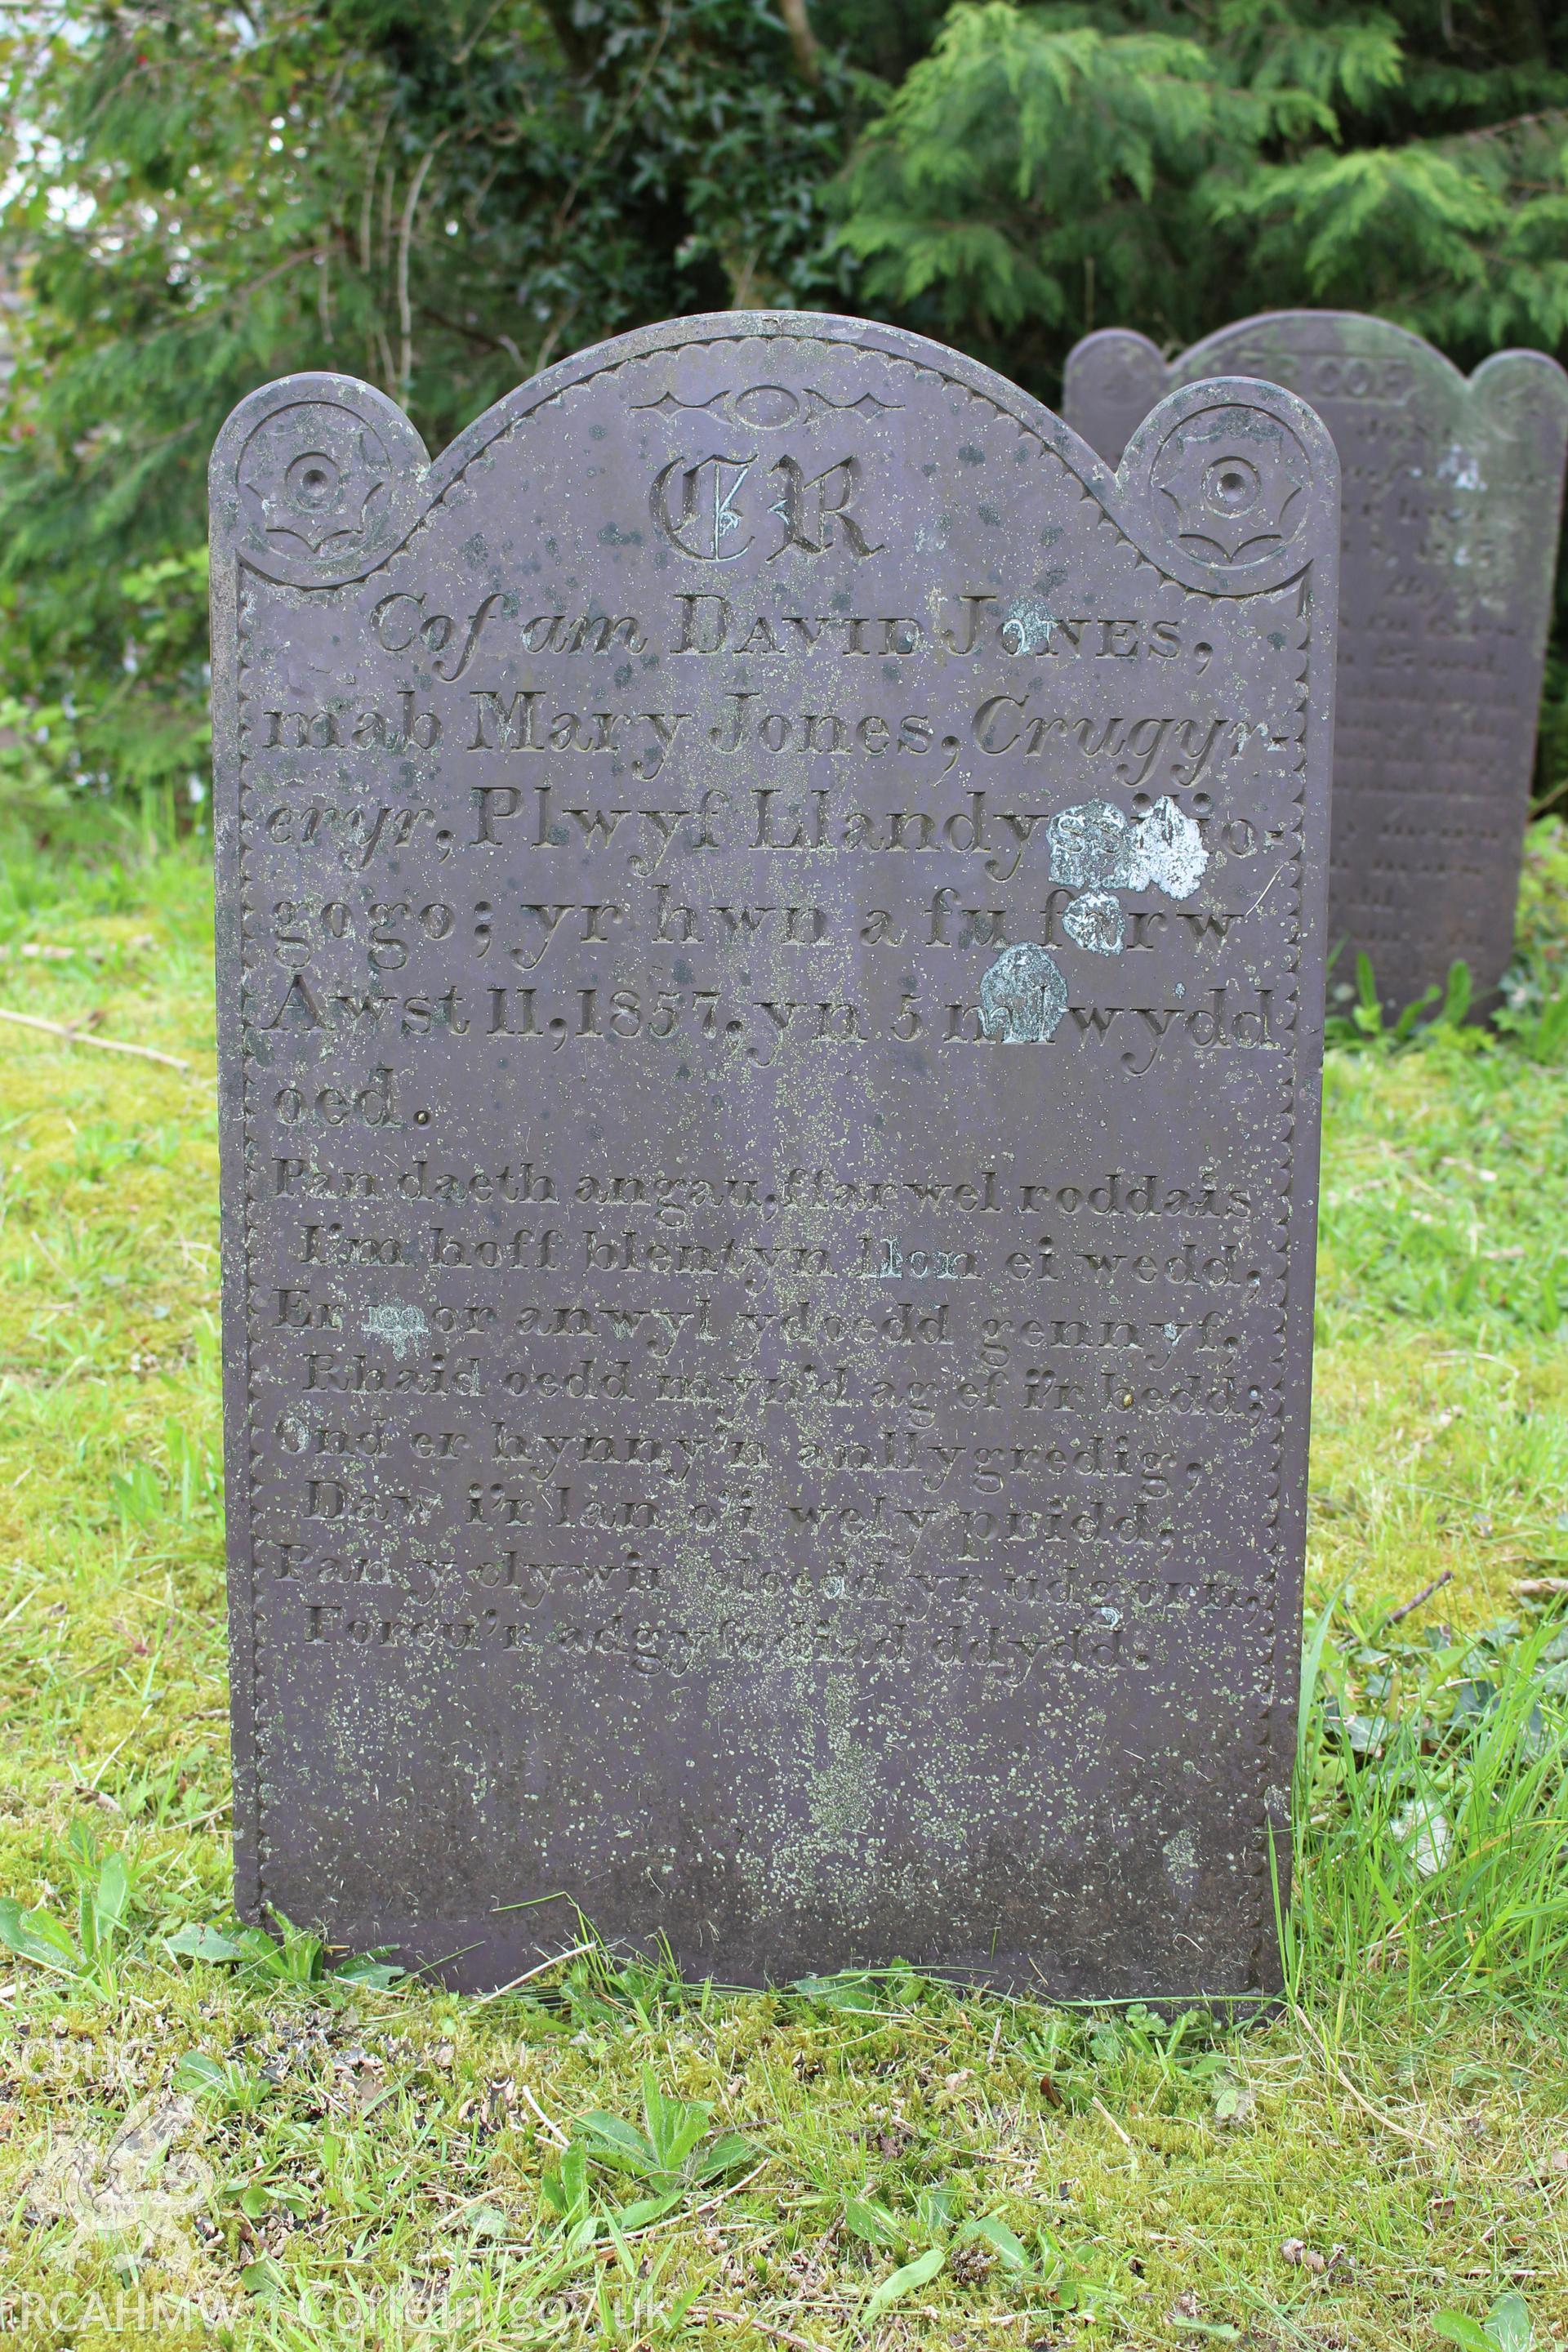 Gravestone of David Jones